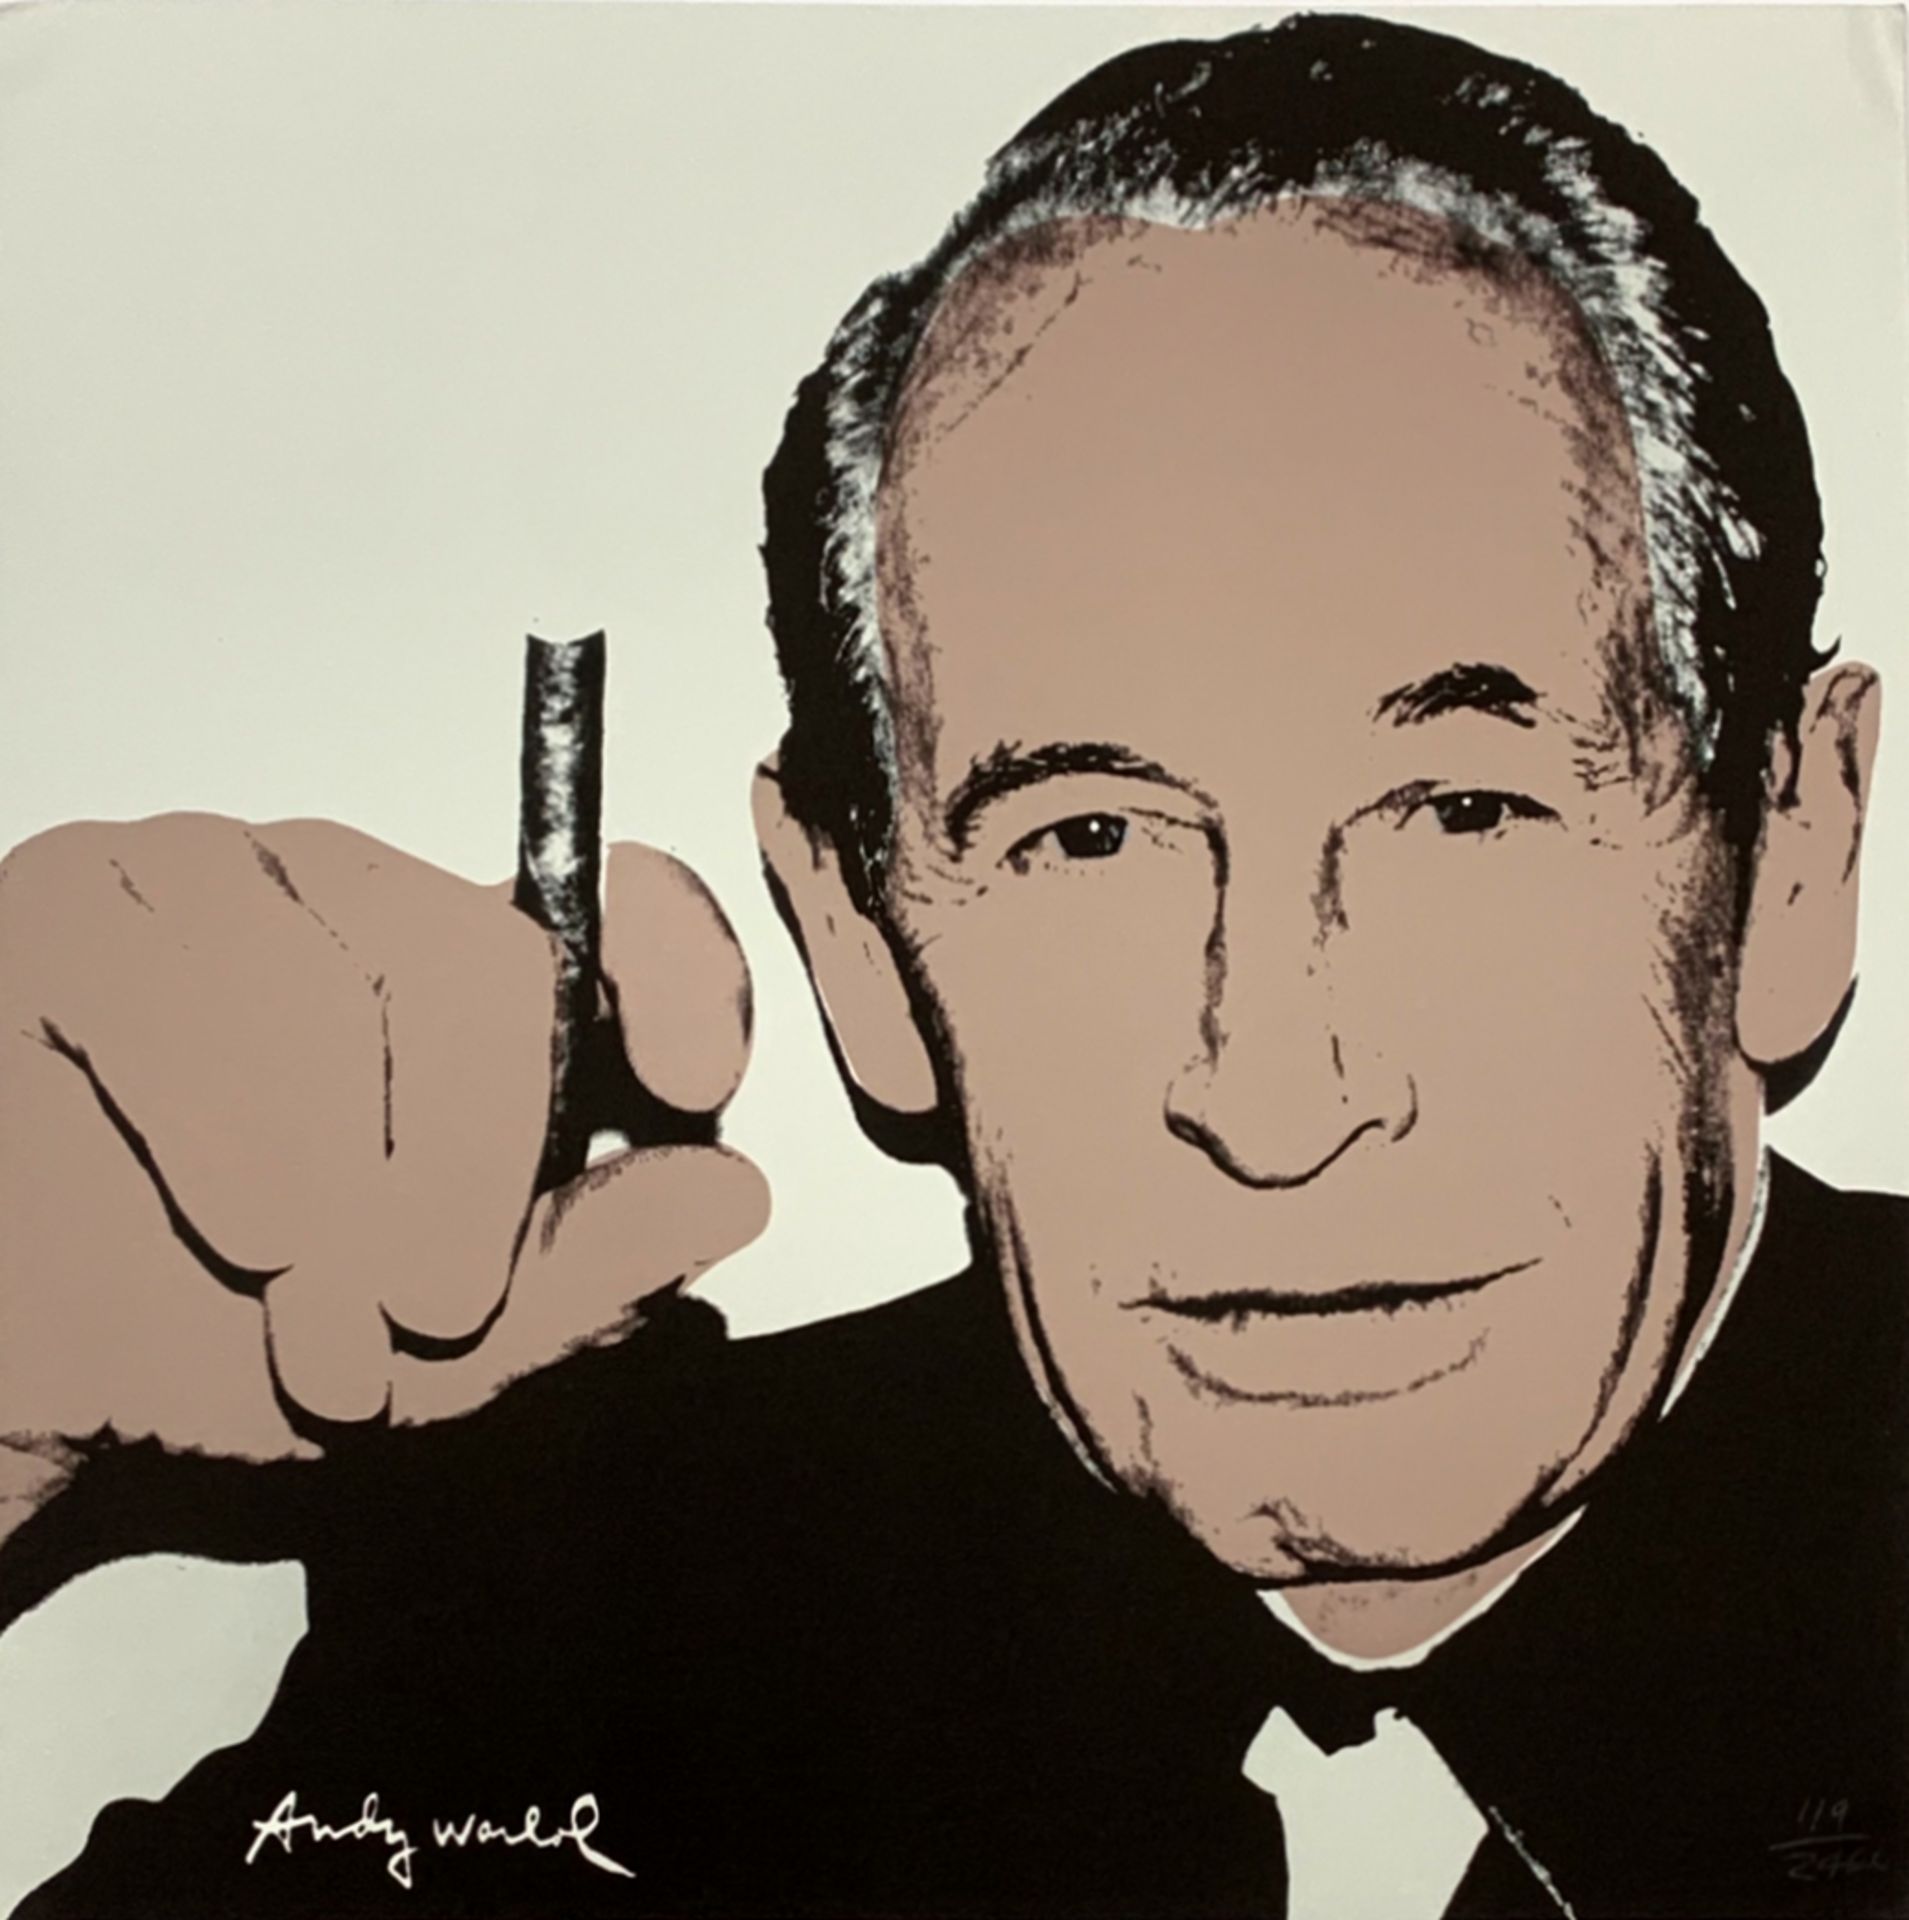 Andy Warhol (1928-1987), Lithograph